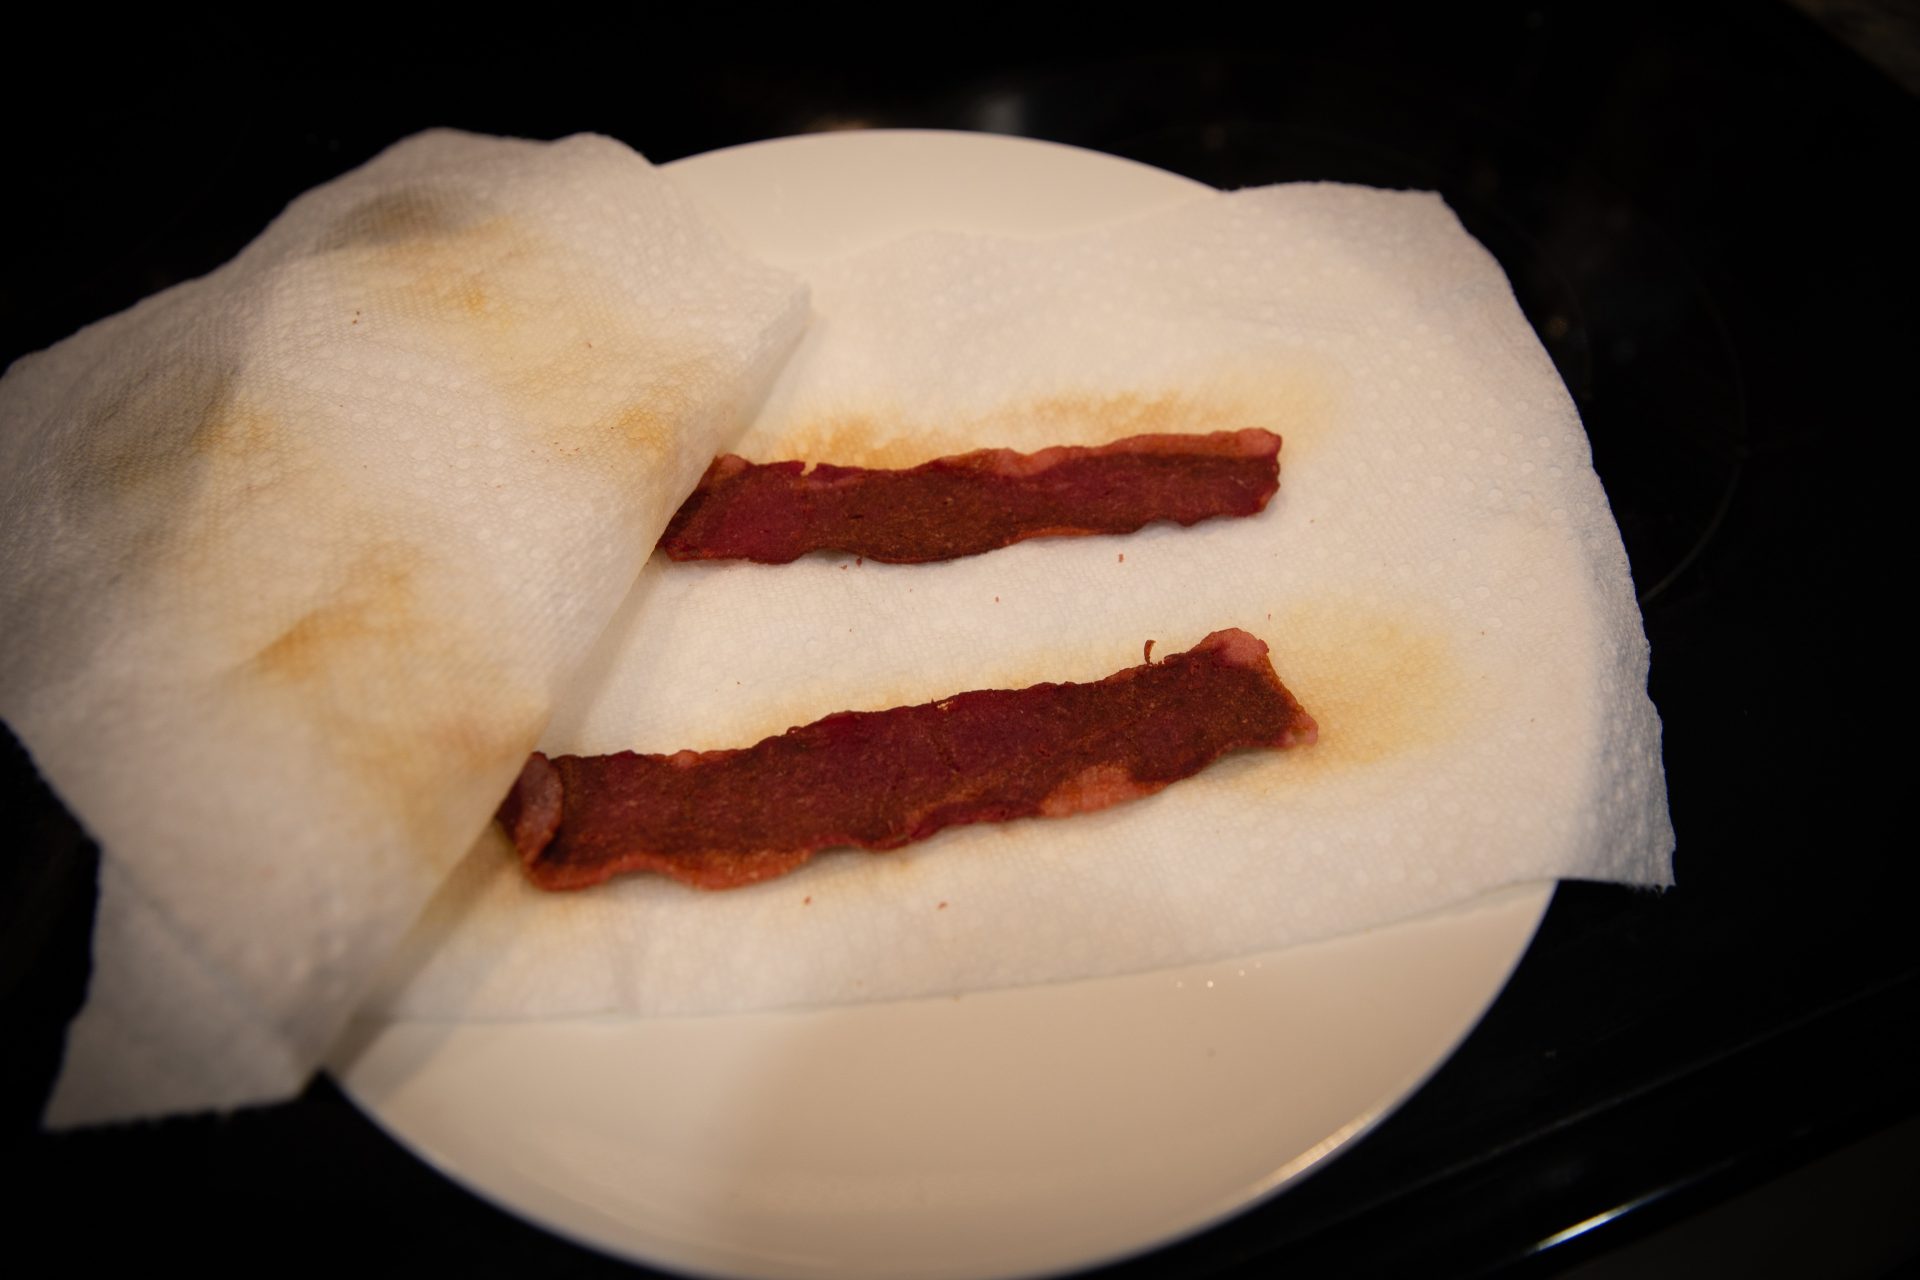 Microwaved turkey bacon.